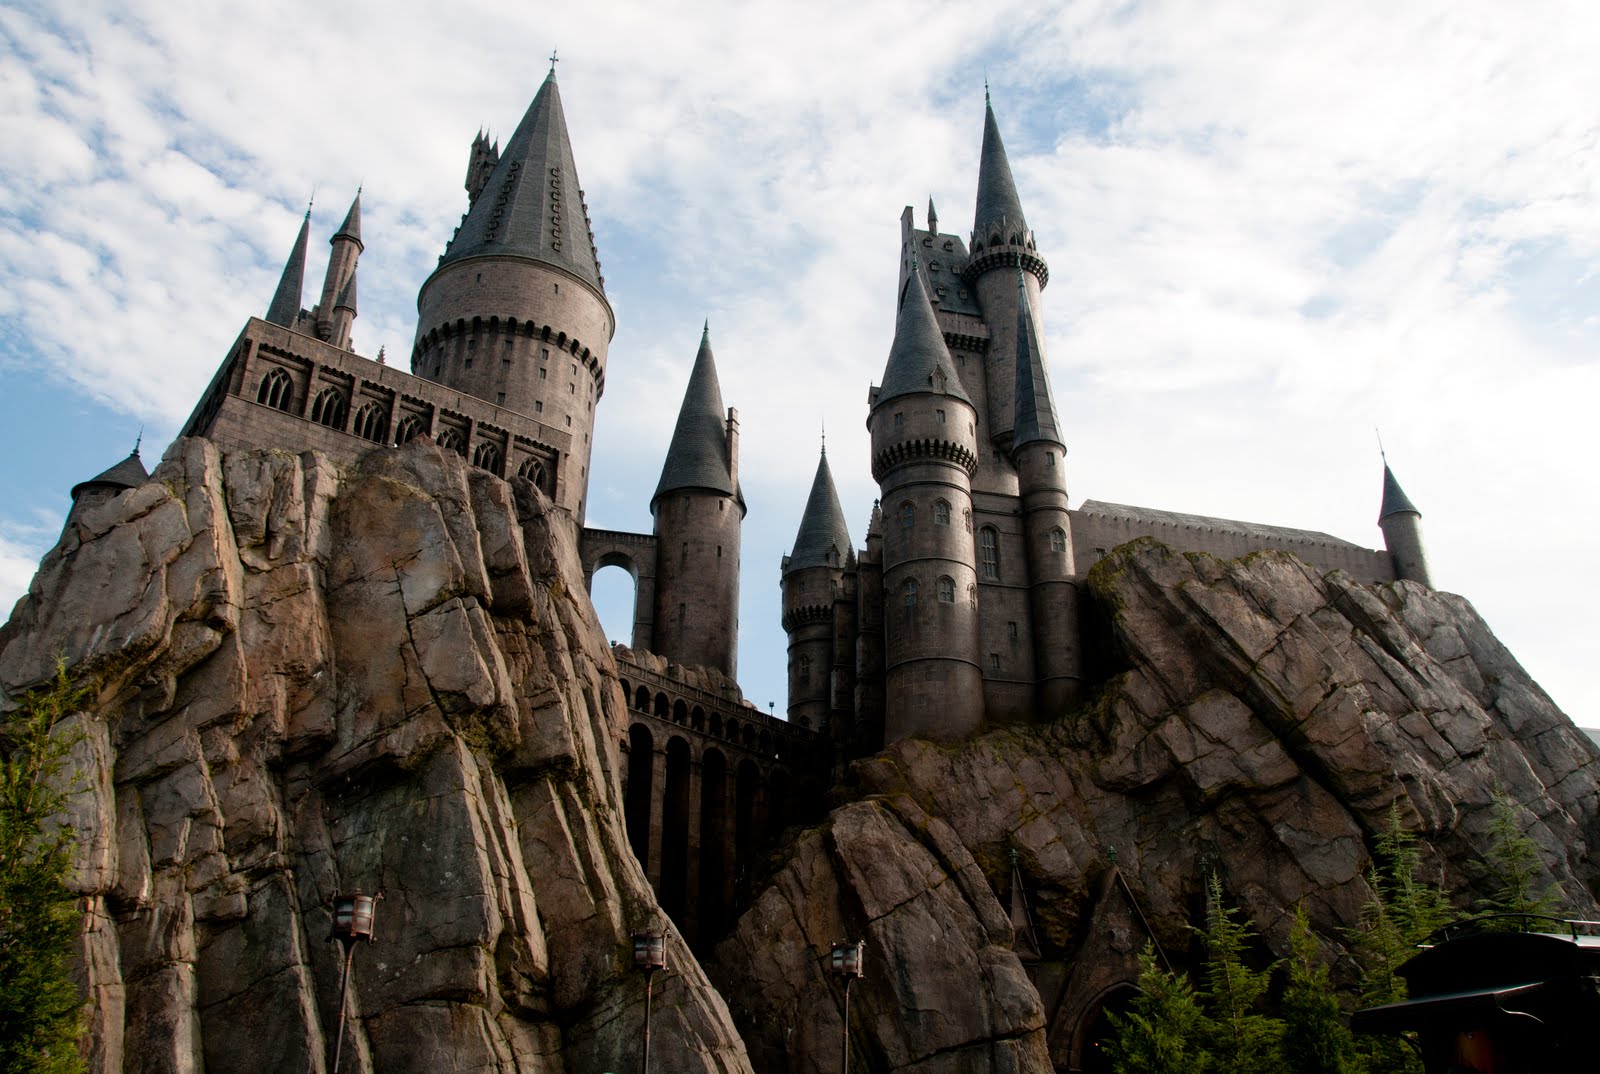 Замок Хогвартс из Гарри Поттера